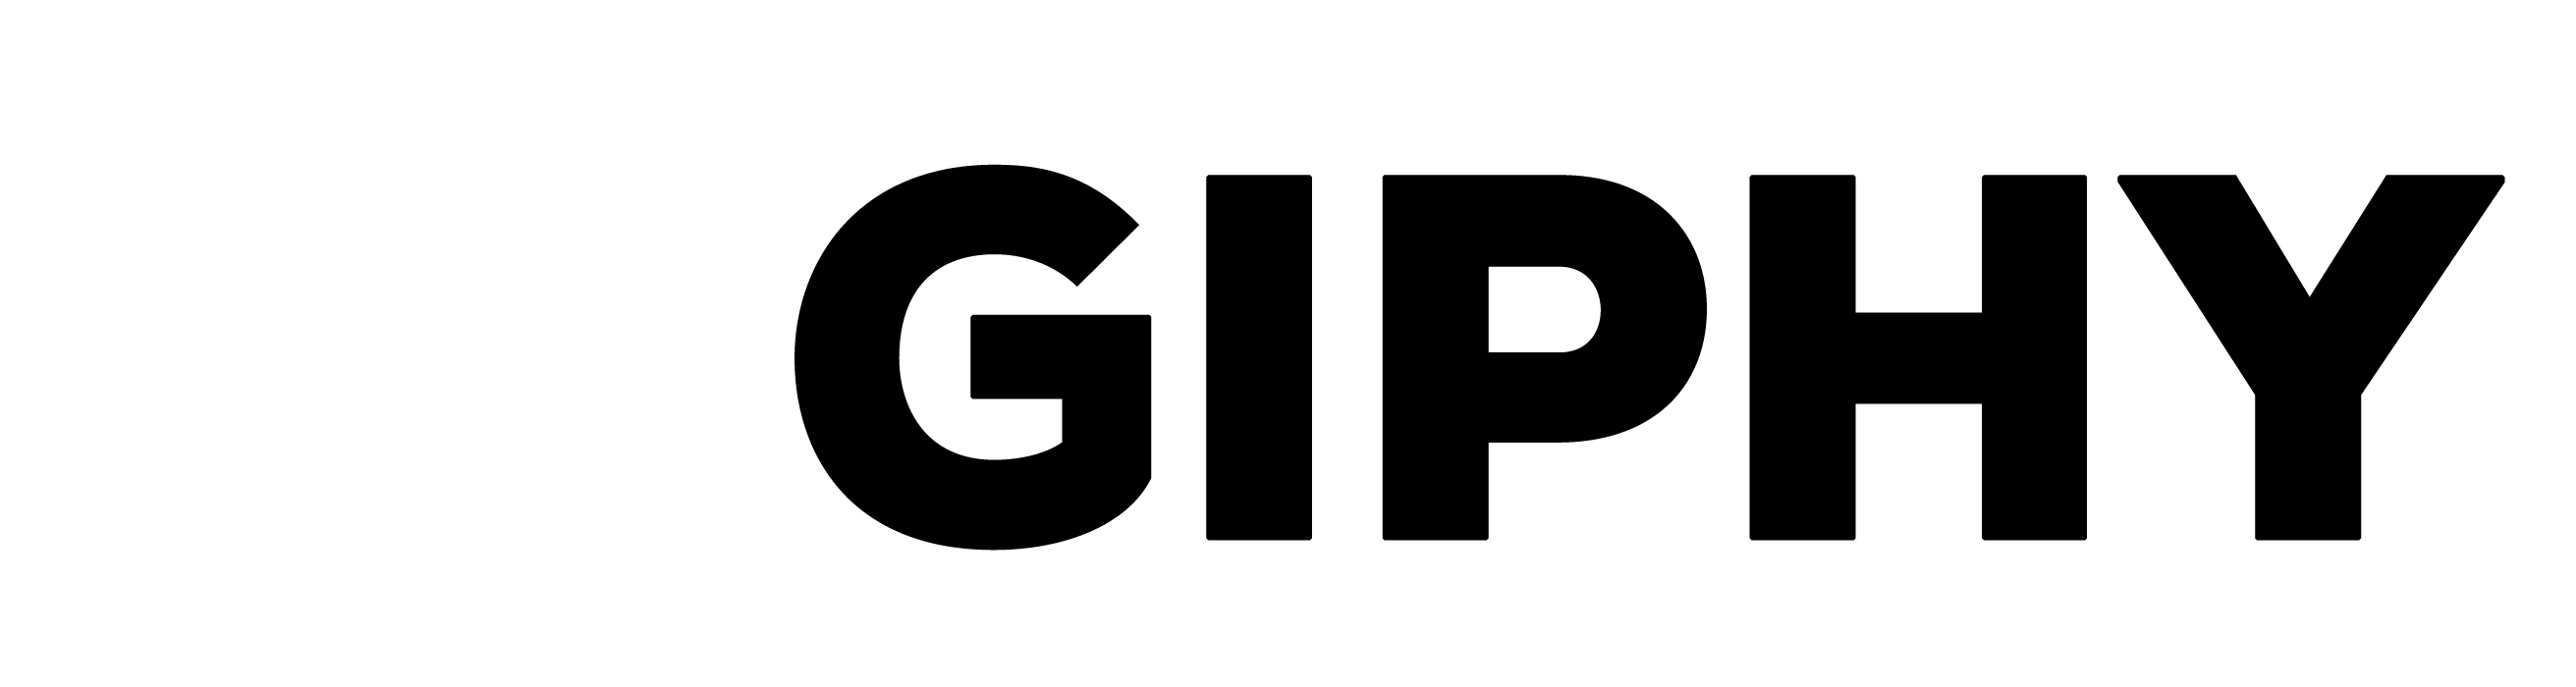 Giphy Logo - Giphy Logos